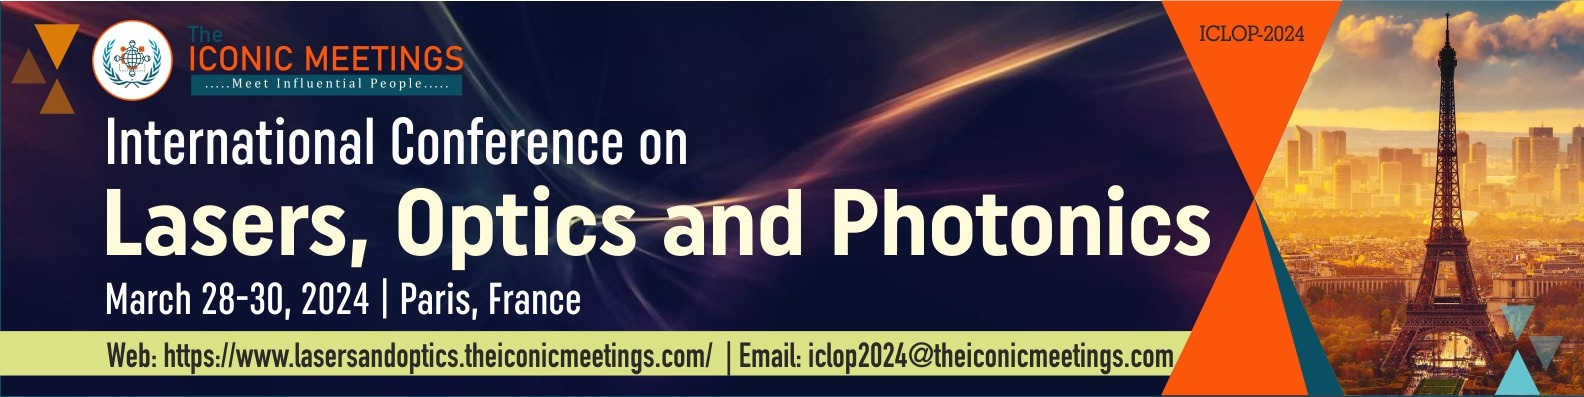 International Conference on Lasers, Optics and Photonics. 2024